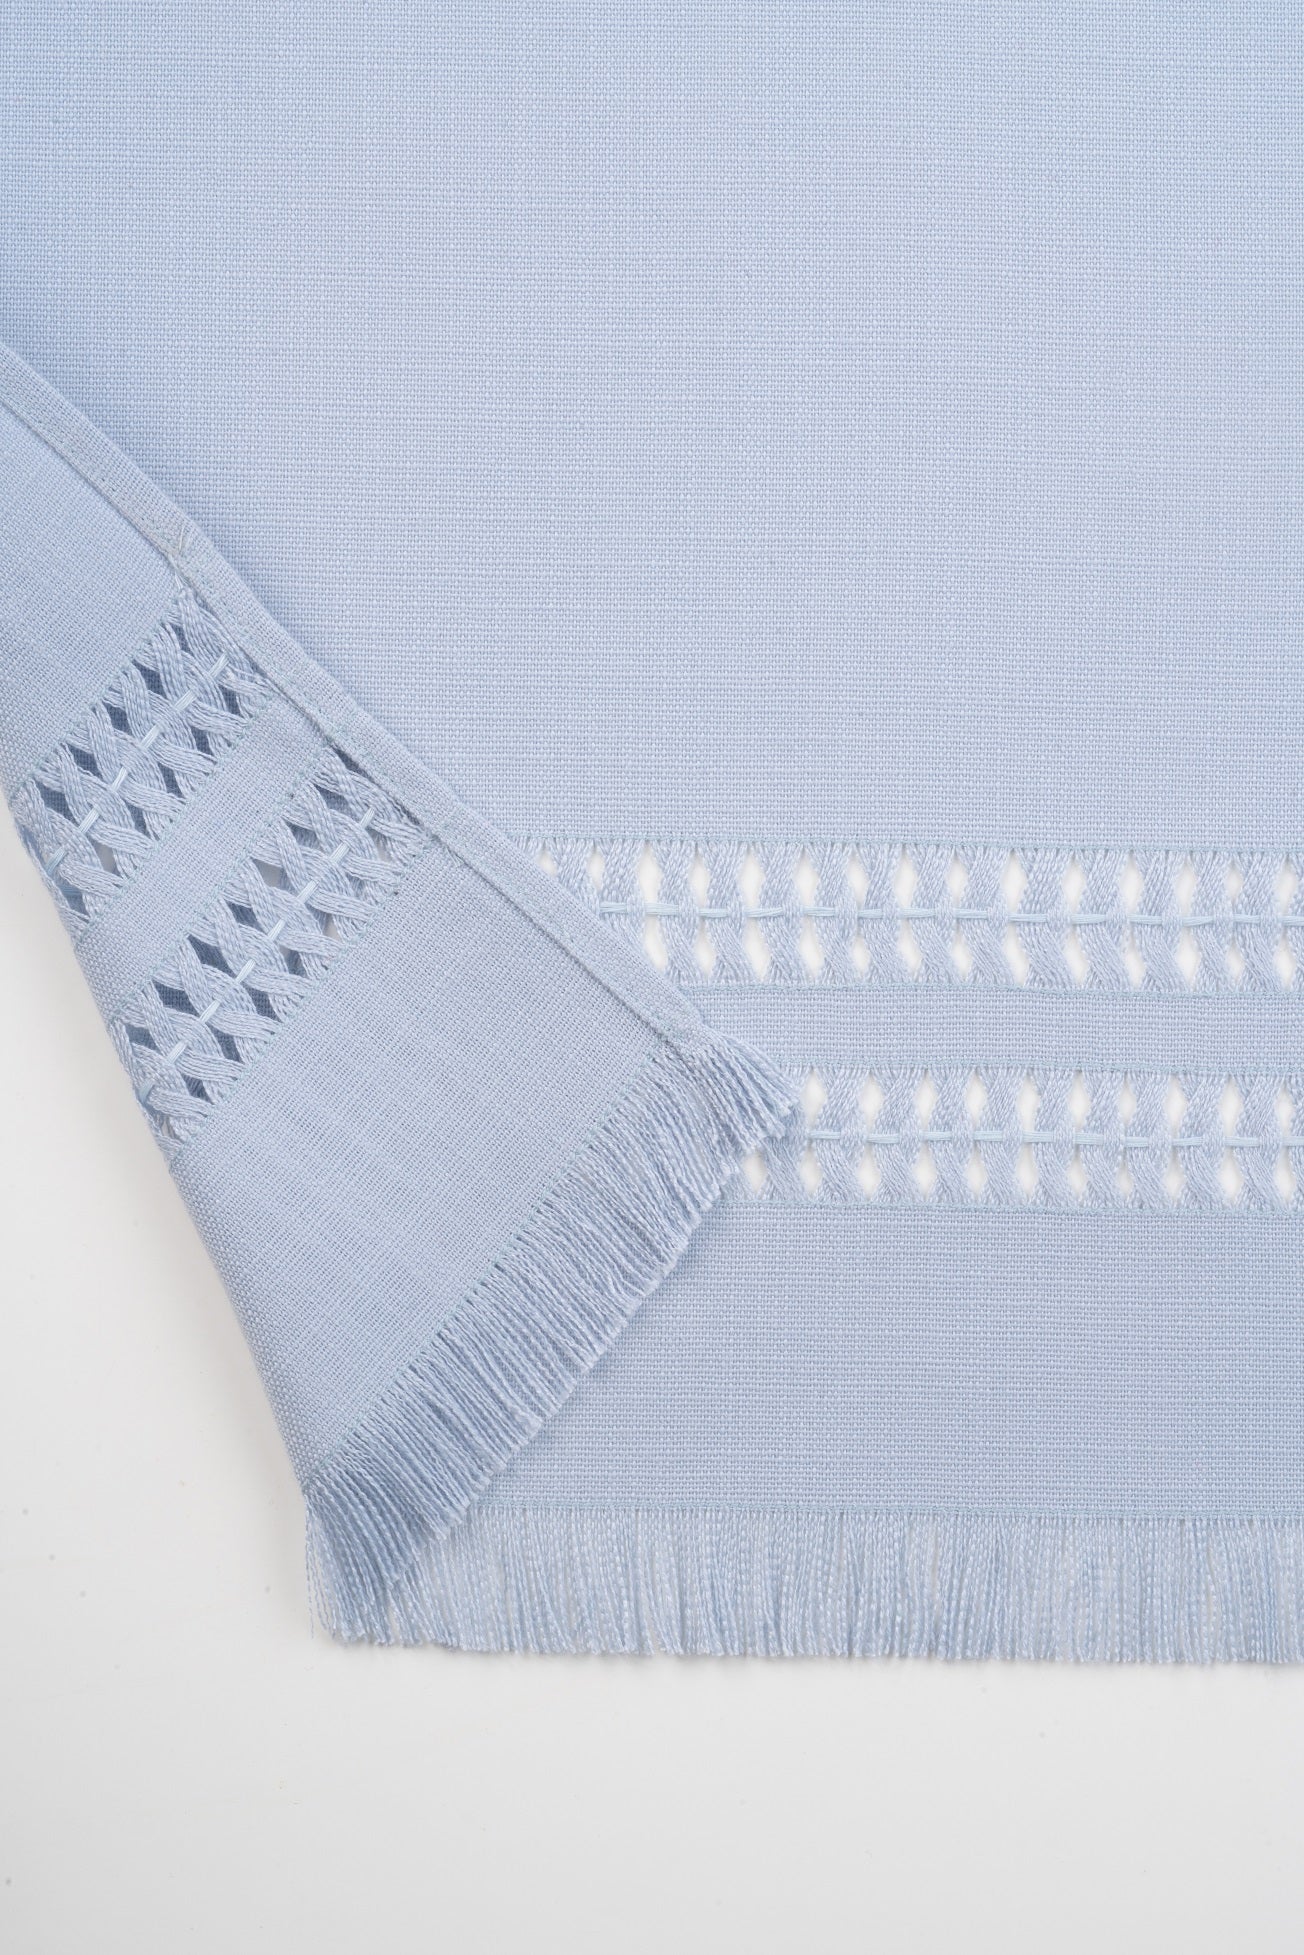 Light Blue Linen Look Recycled Fabric Hand Hemstitch Table Runner